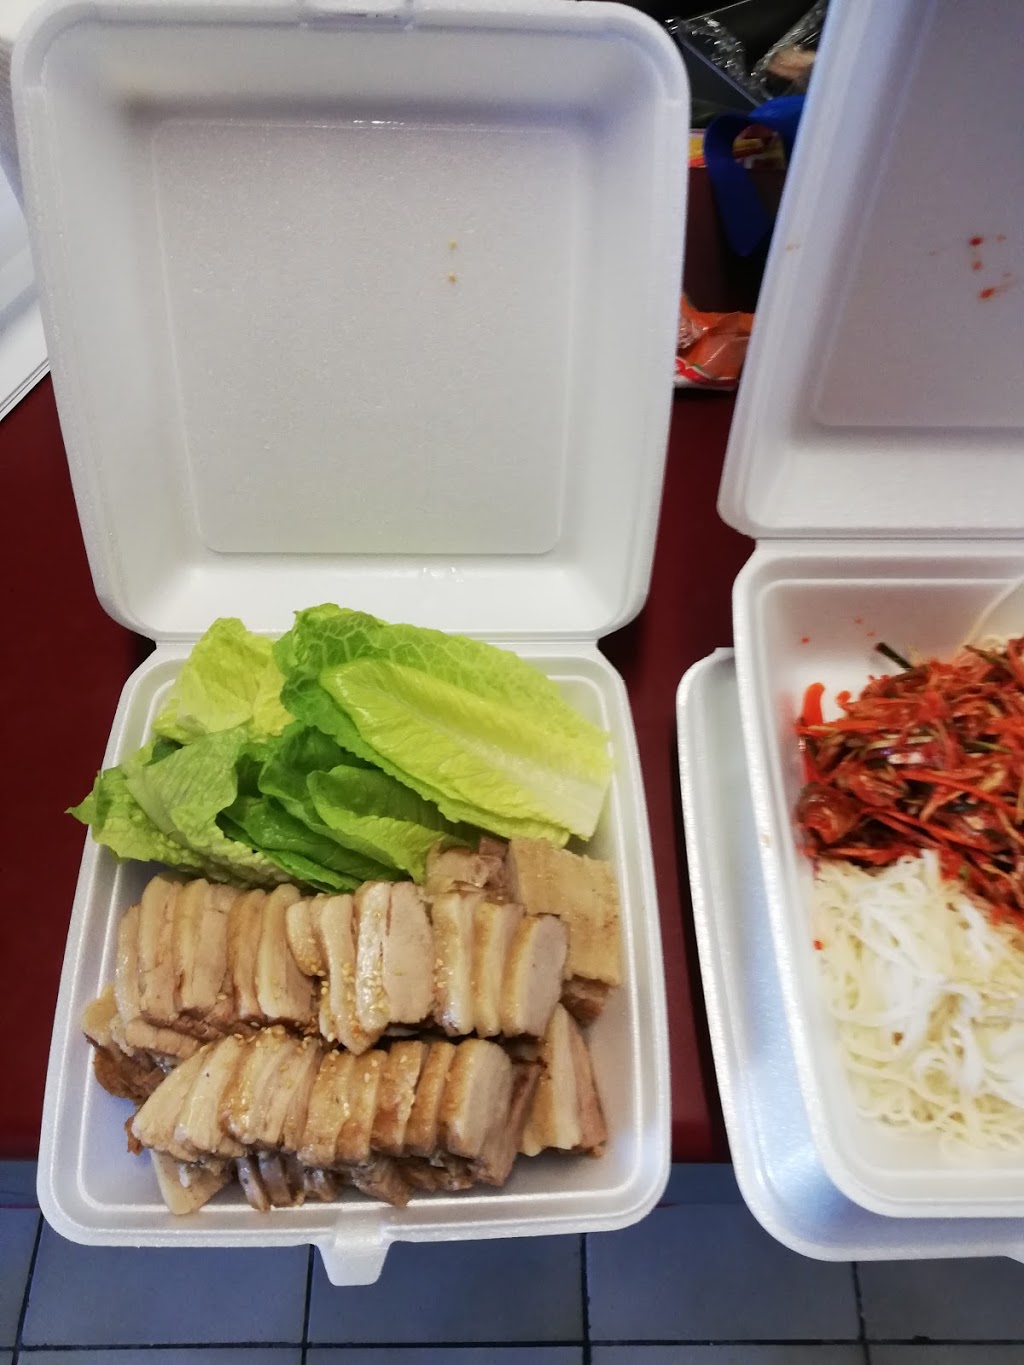 Banchan-All About Korean Food | restaurant | 160 Hampstead Rd, Broadview SA 5083, Australia | 0405540009 OR +61 405 540 009